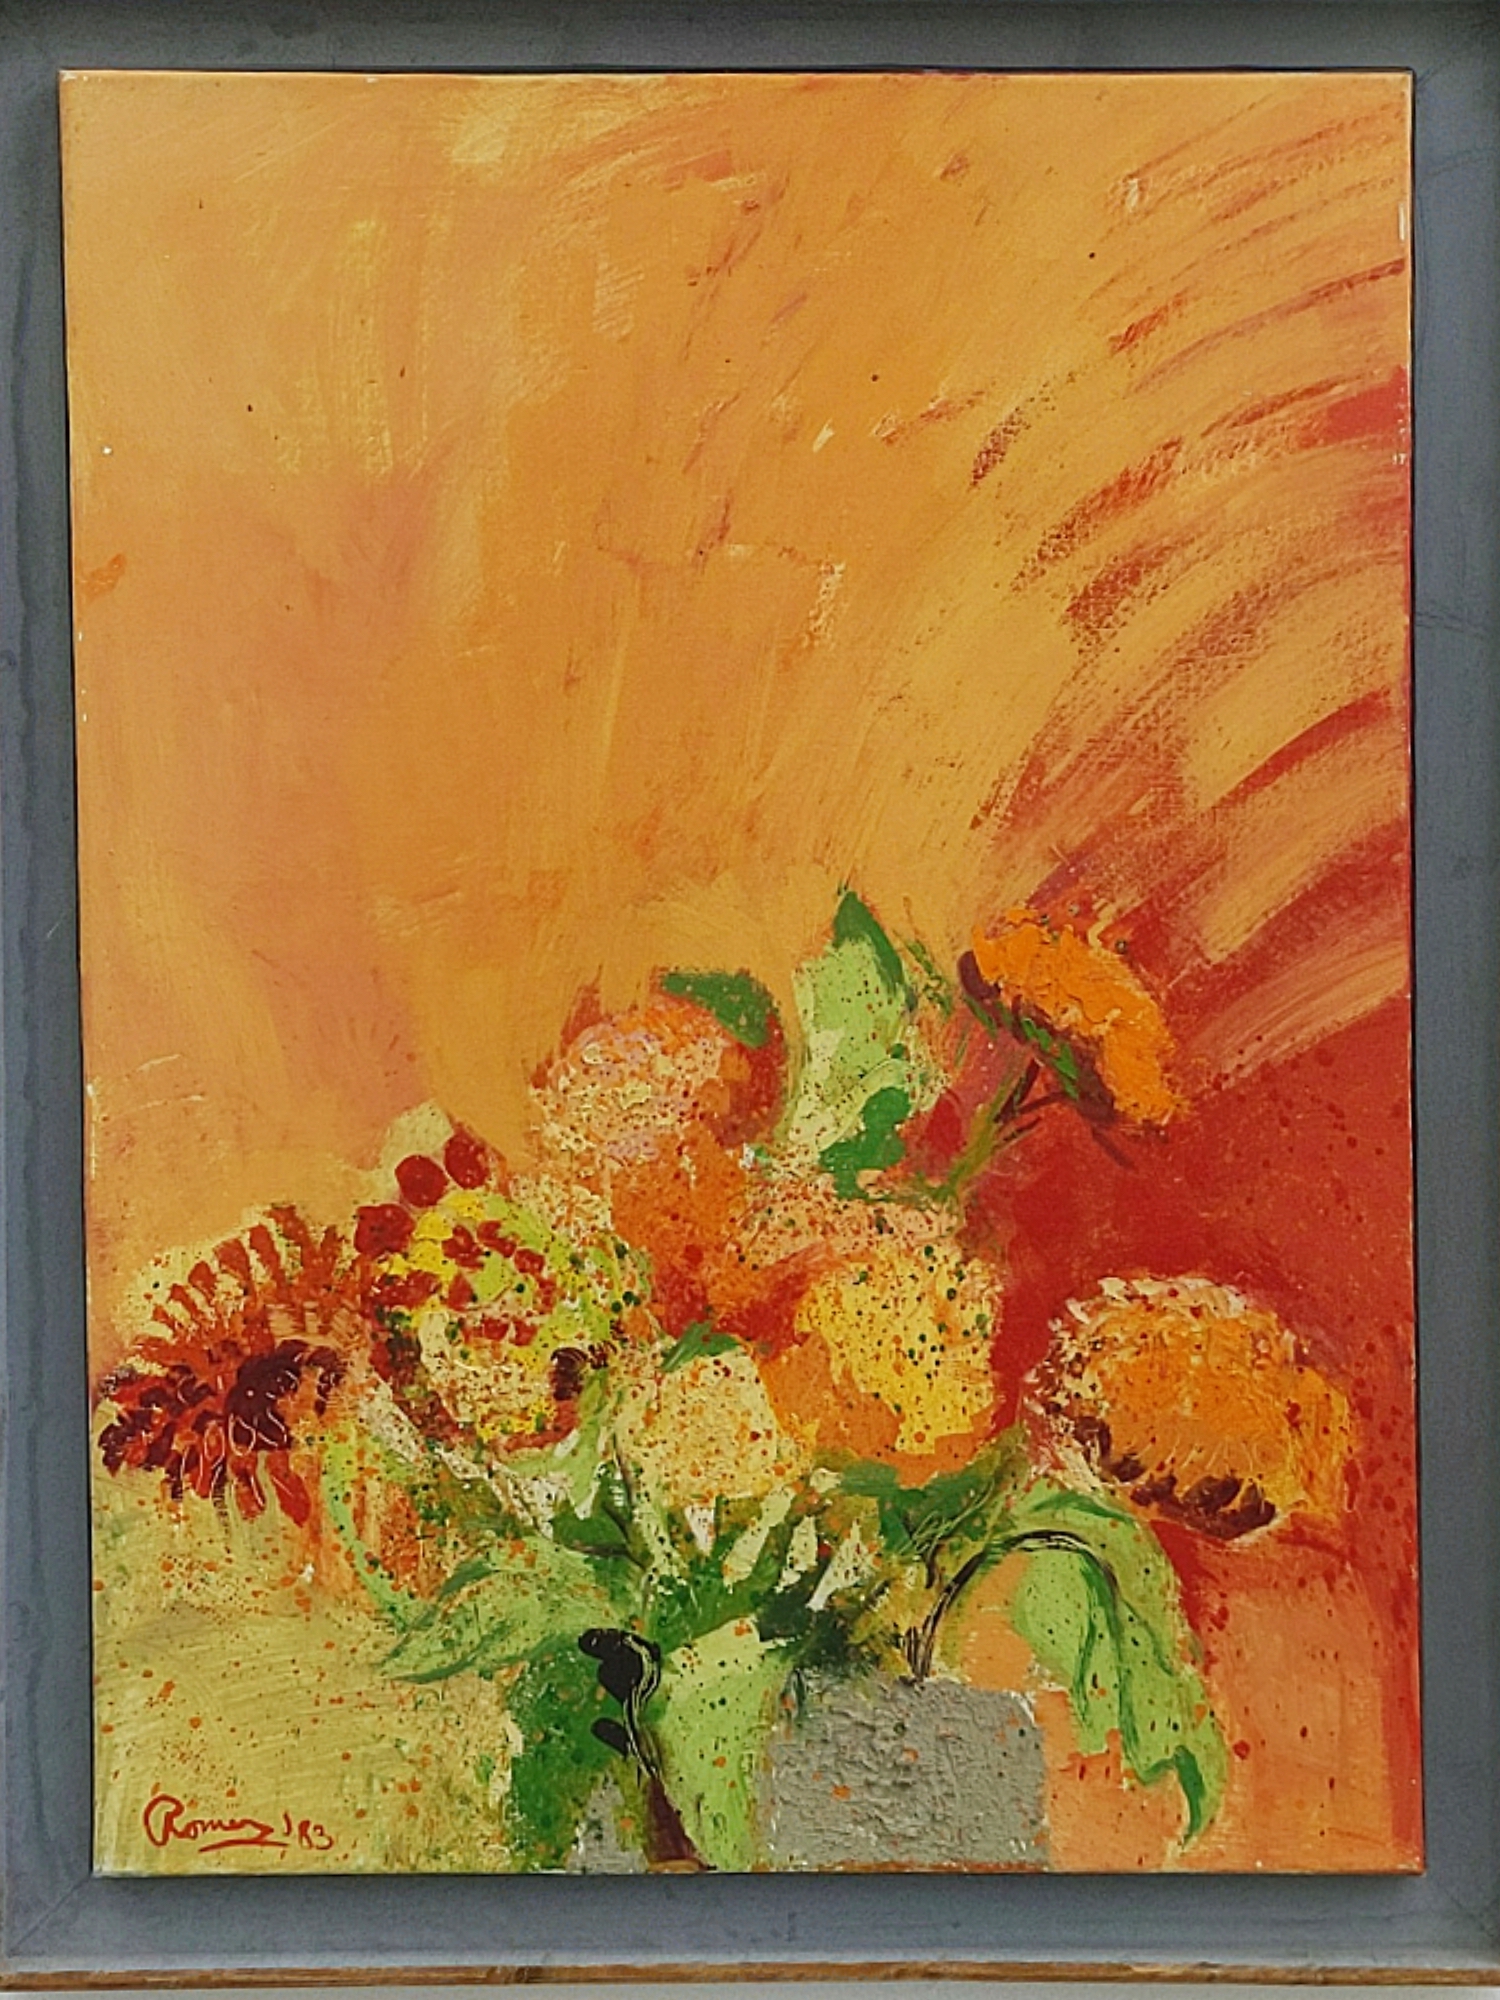 "Bouquet orange", 1983, oja på duk, 91 x 70 cm